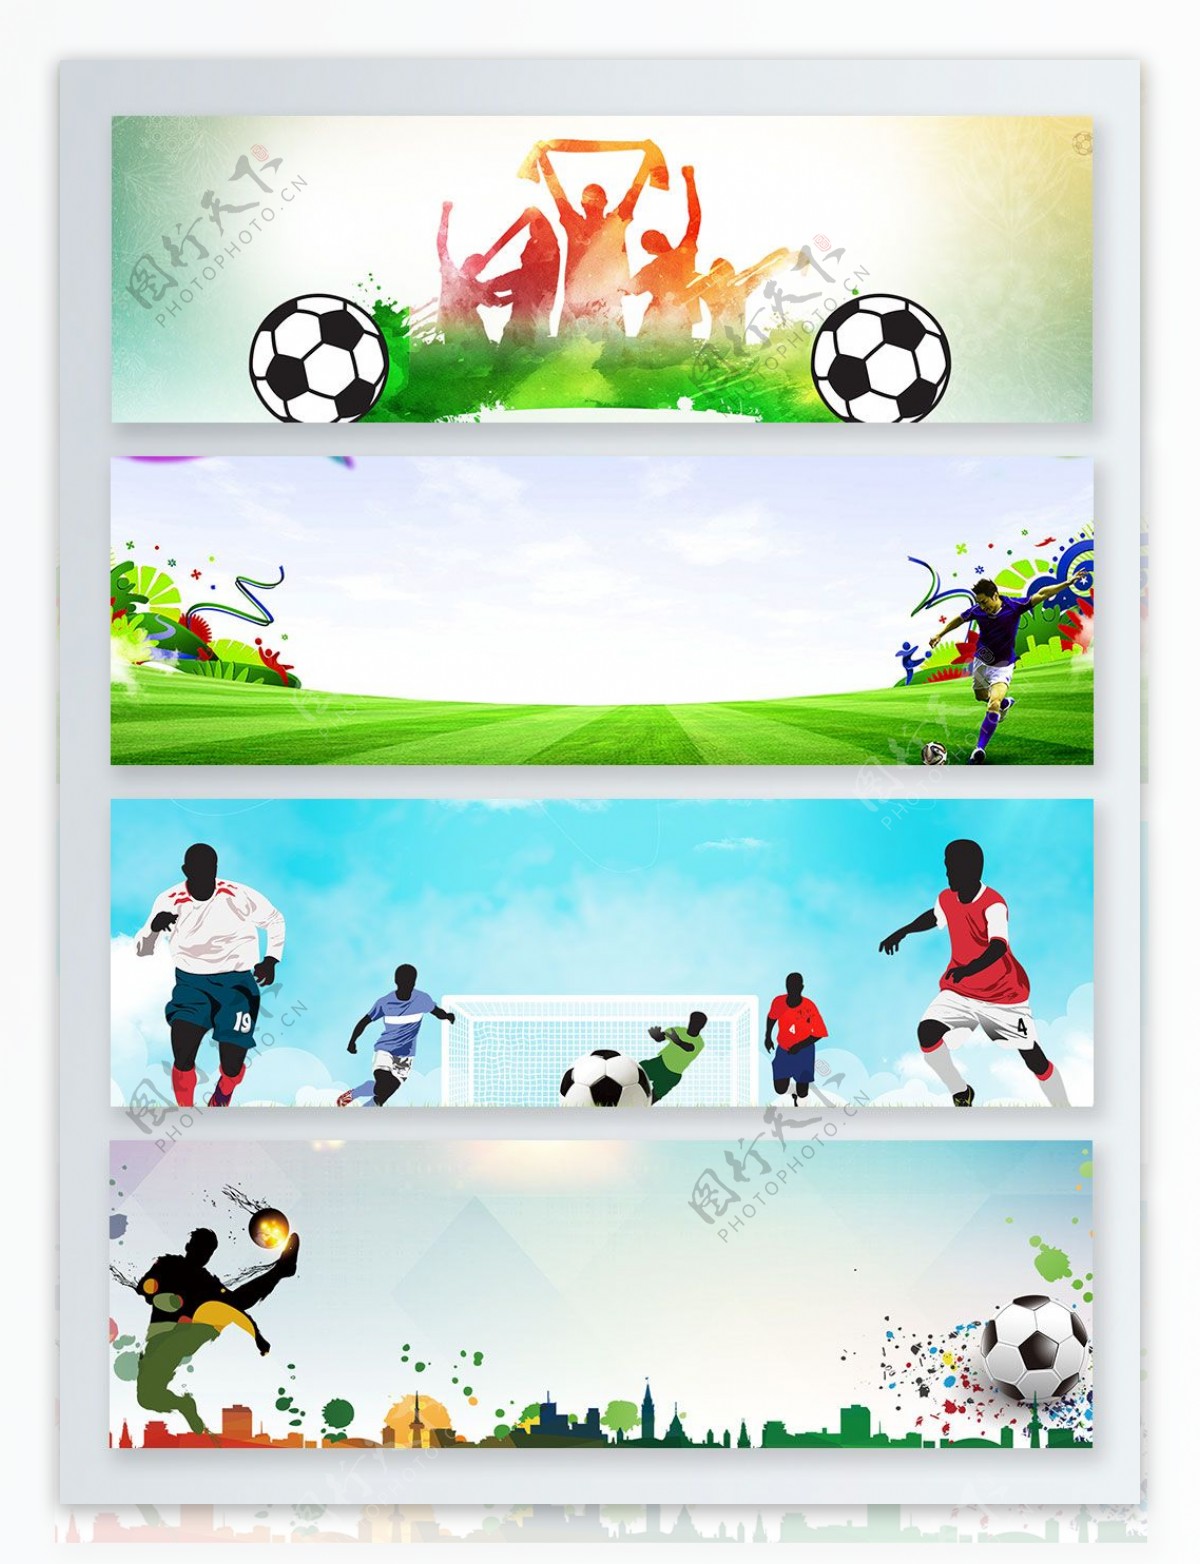 足球比赛世界杯banner背景